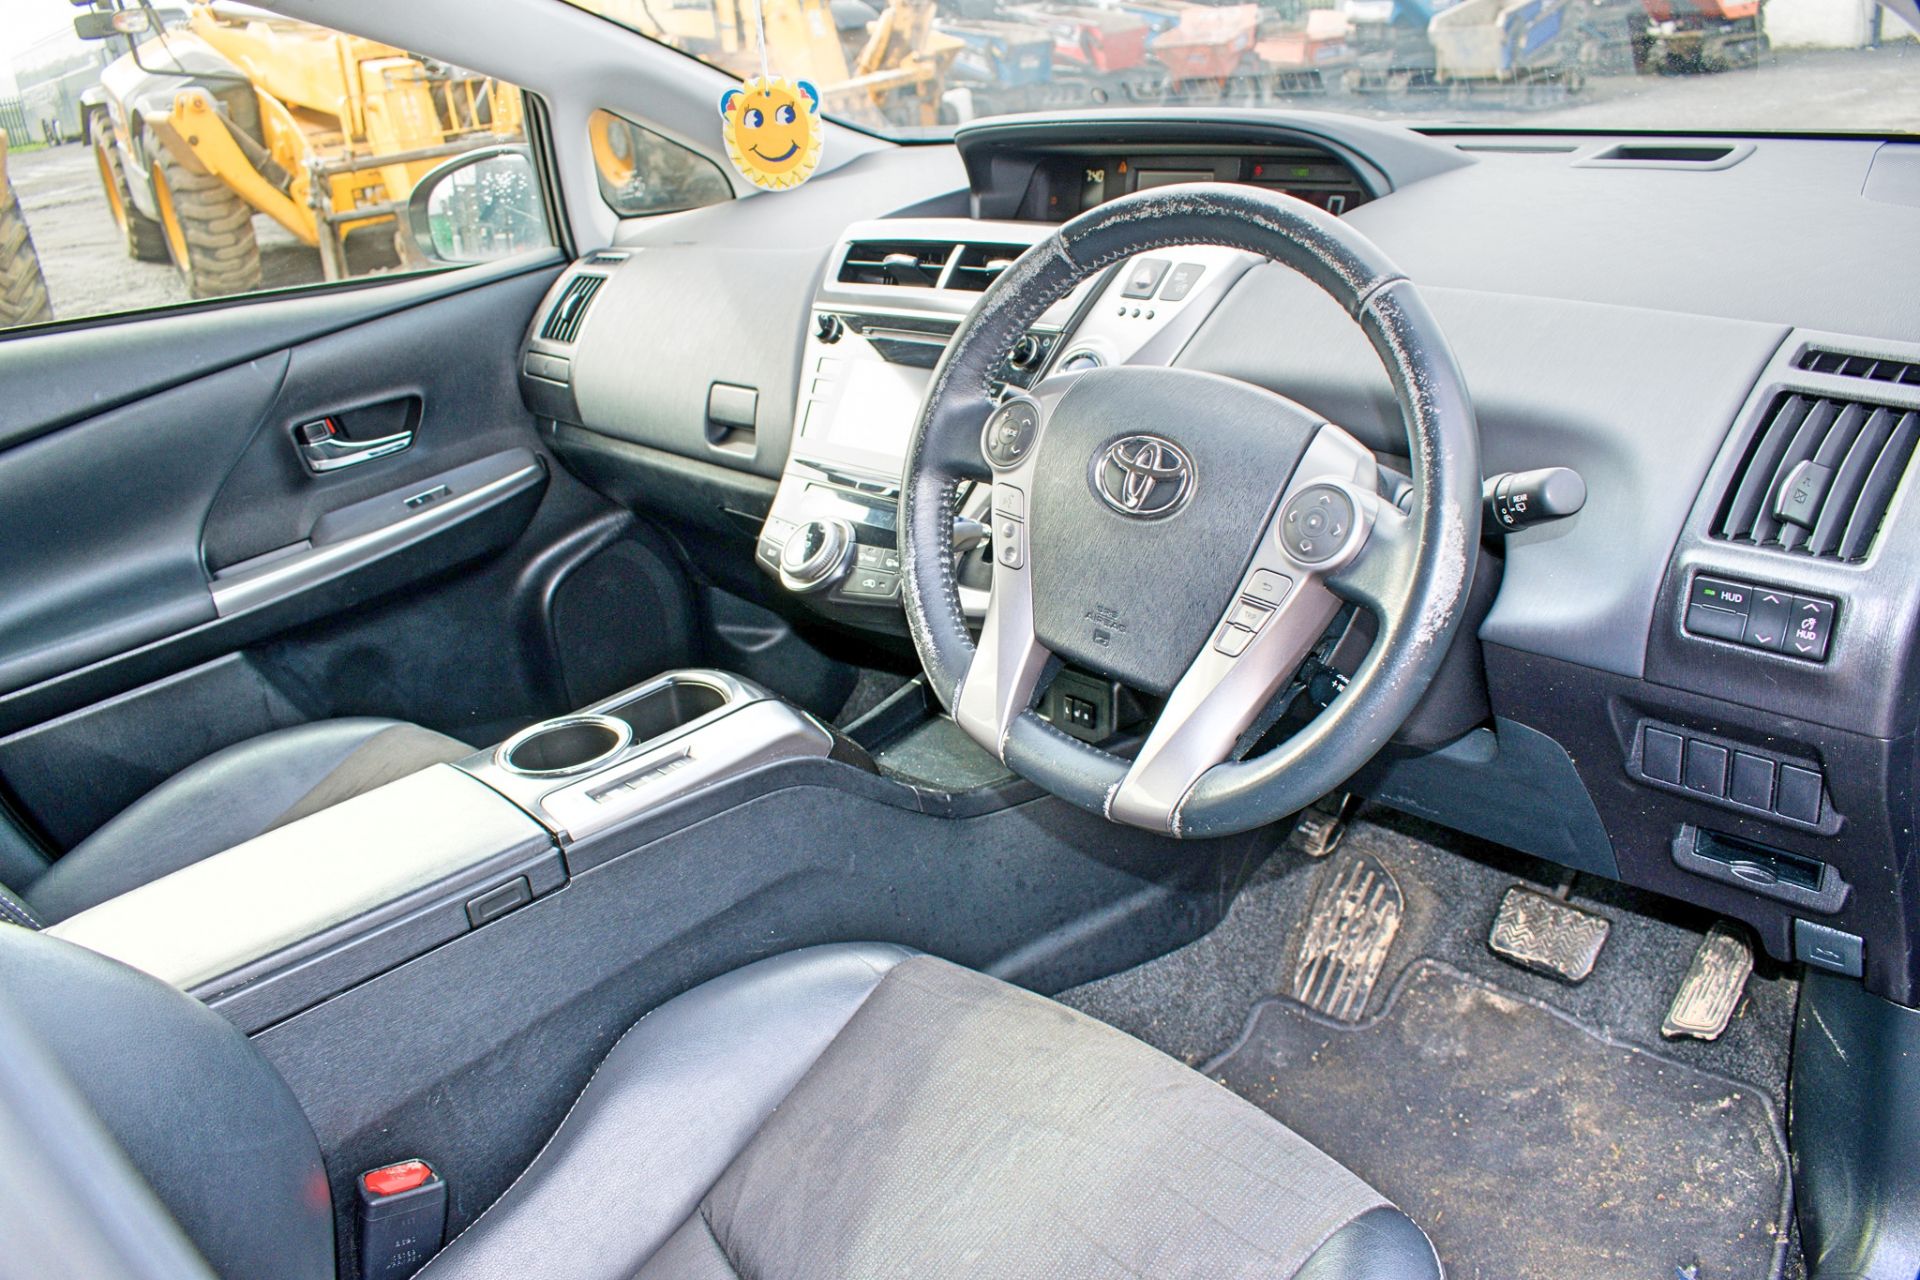 Toyota Prius Icon CVT Hybrid 5 door hatchback car Registration Number: LO66 BGF Date of - Image 7 of 13